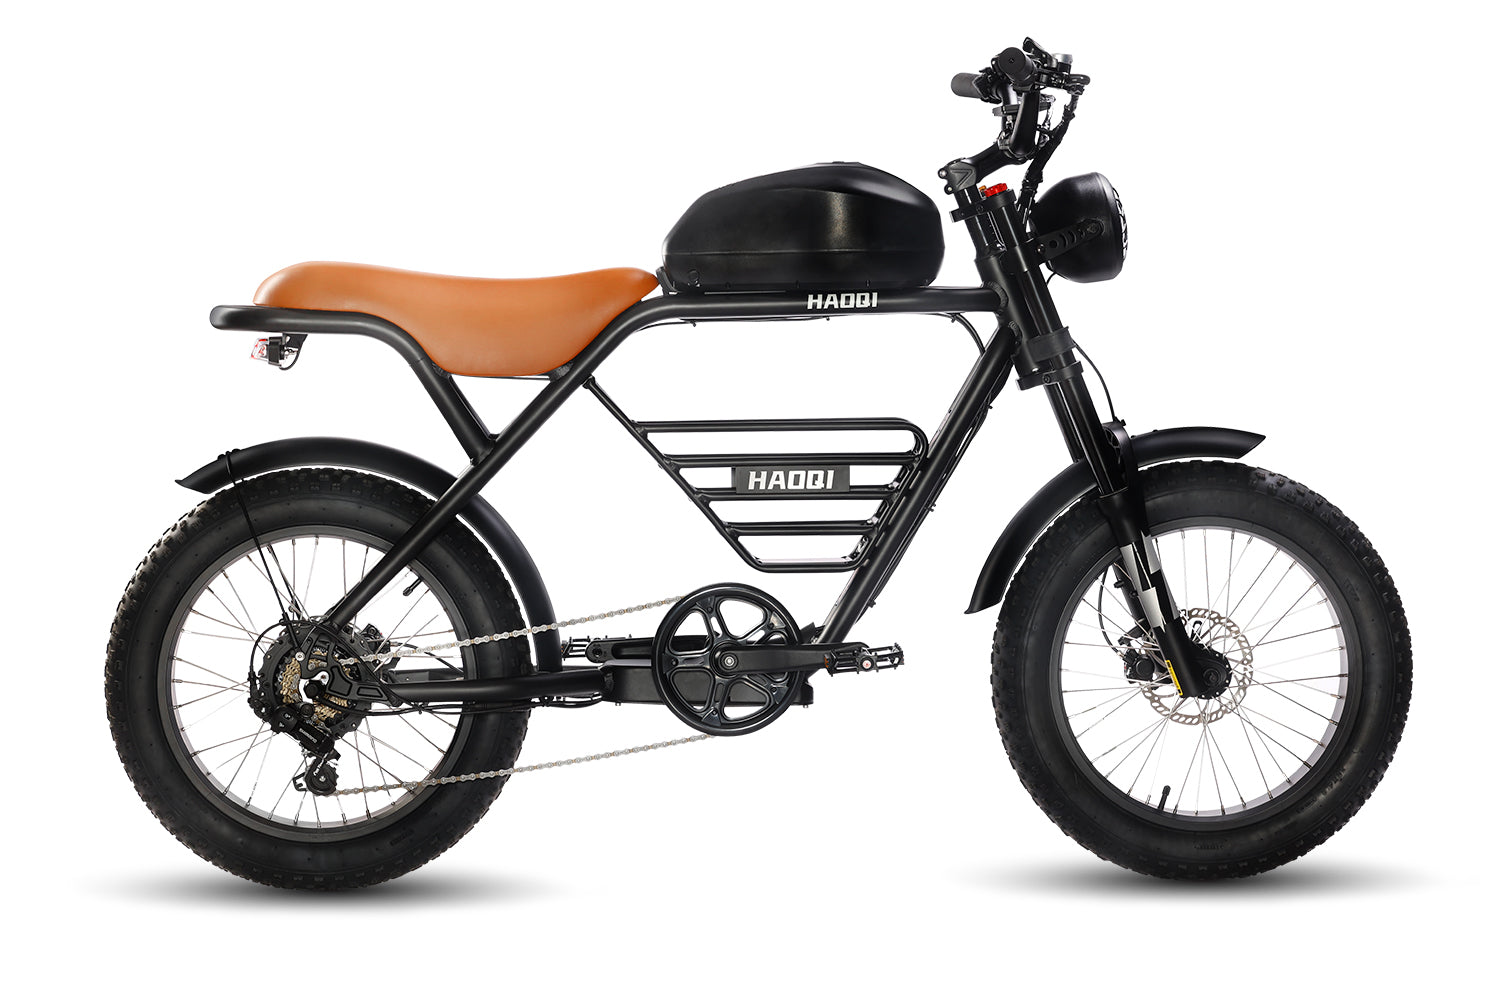 City View Wheels - Elelctric Bike Specialists on X: This Suzuki